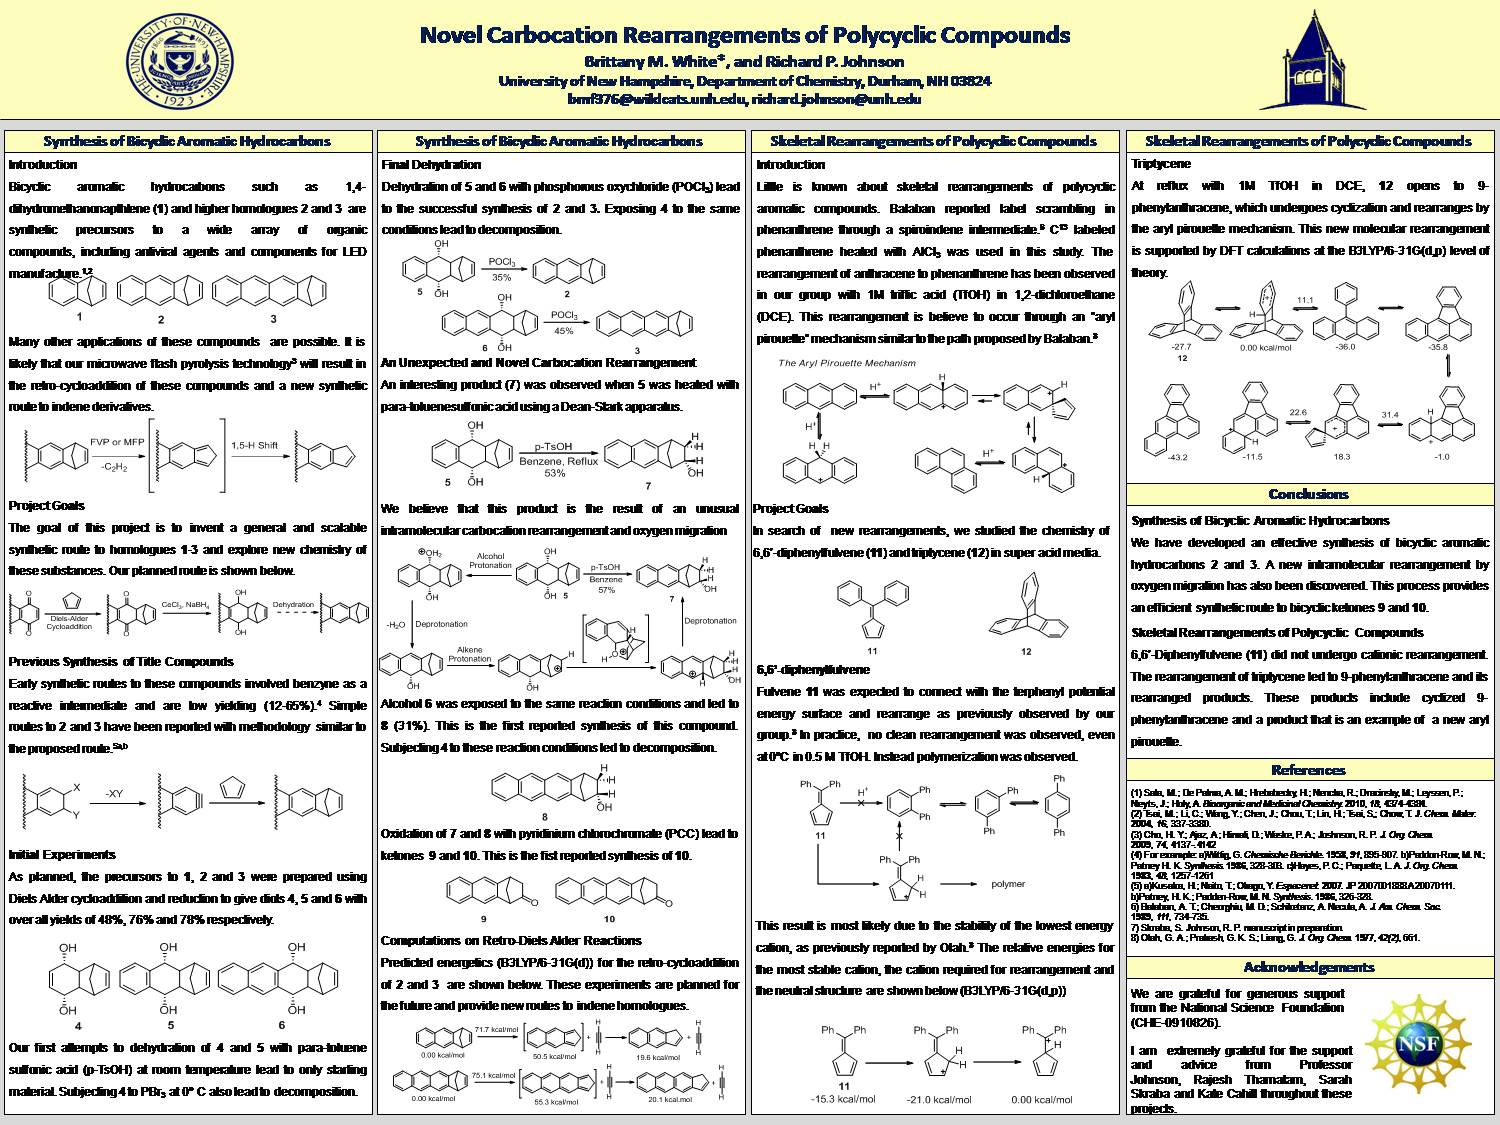 Novel Carbocation Rearrangements Of Polycyclic Compounds by bmf376